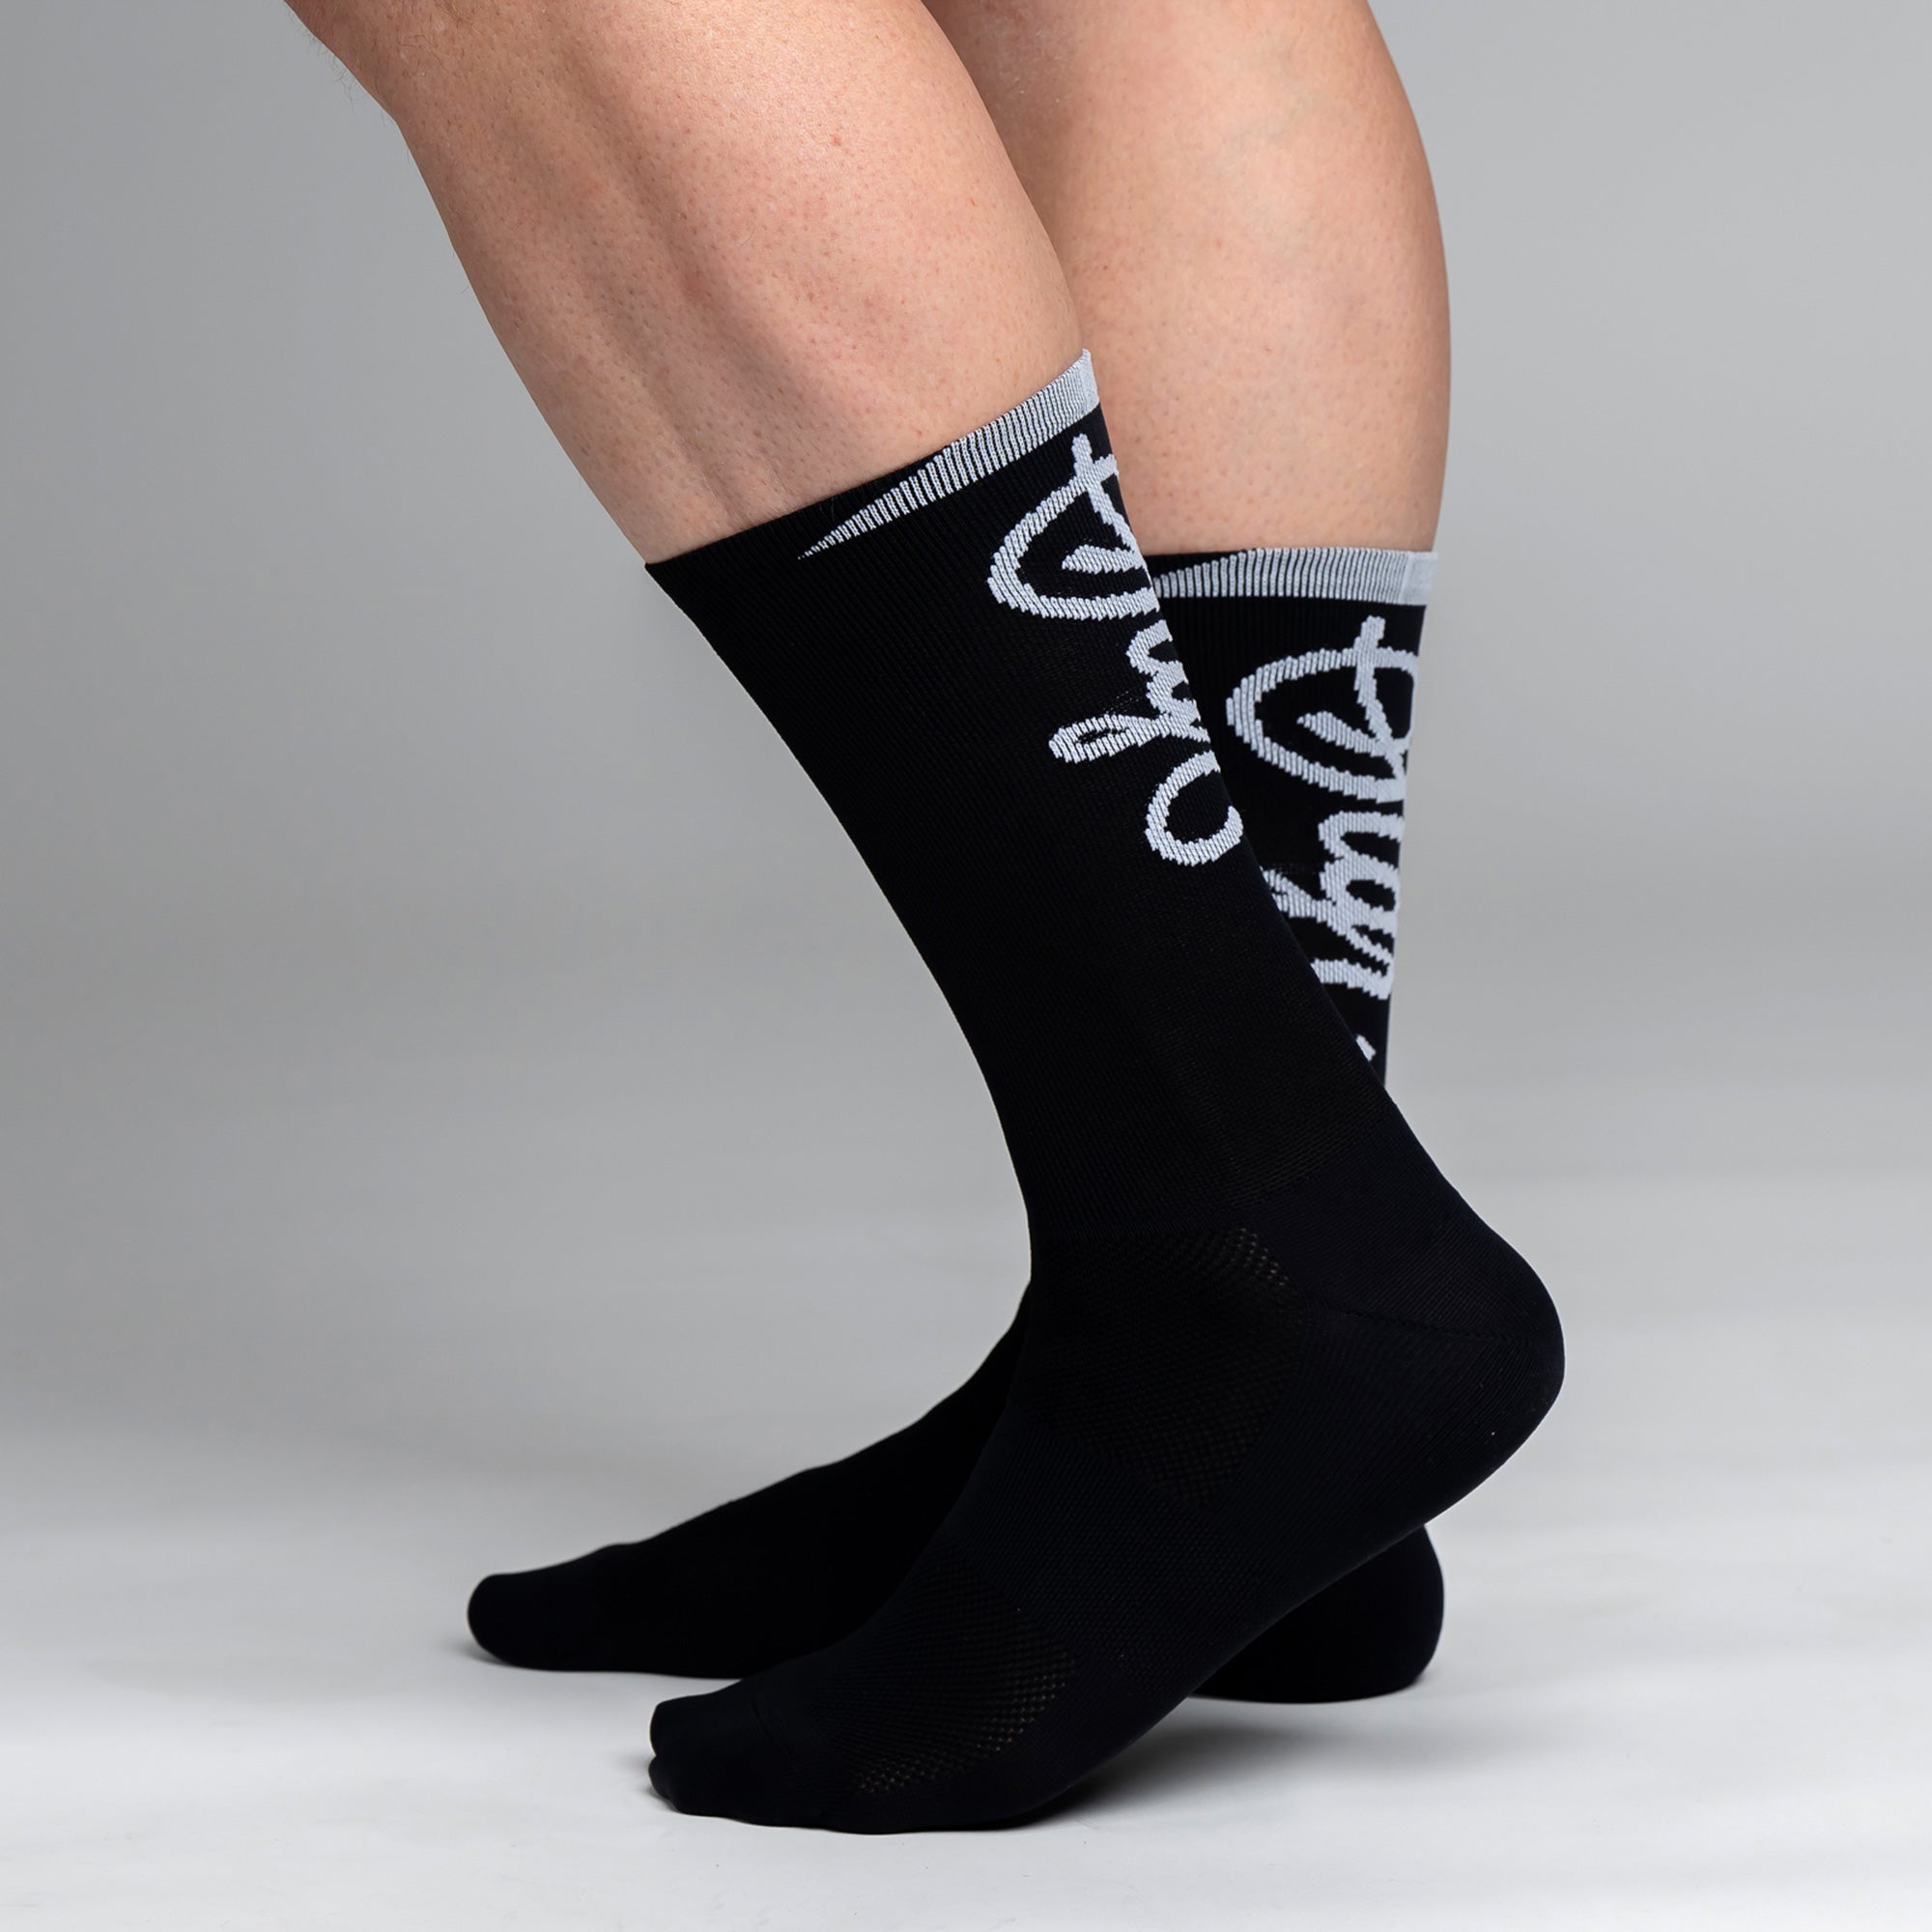 Snok - Larger Logo Black Road Cycling Socks for Men - Pack of 2 pairs